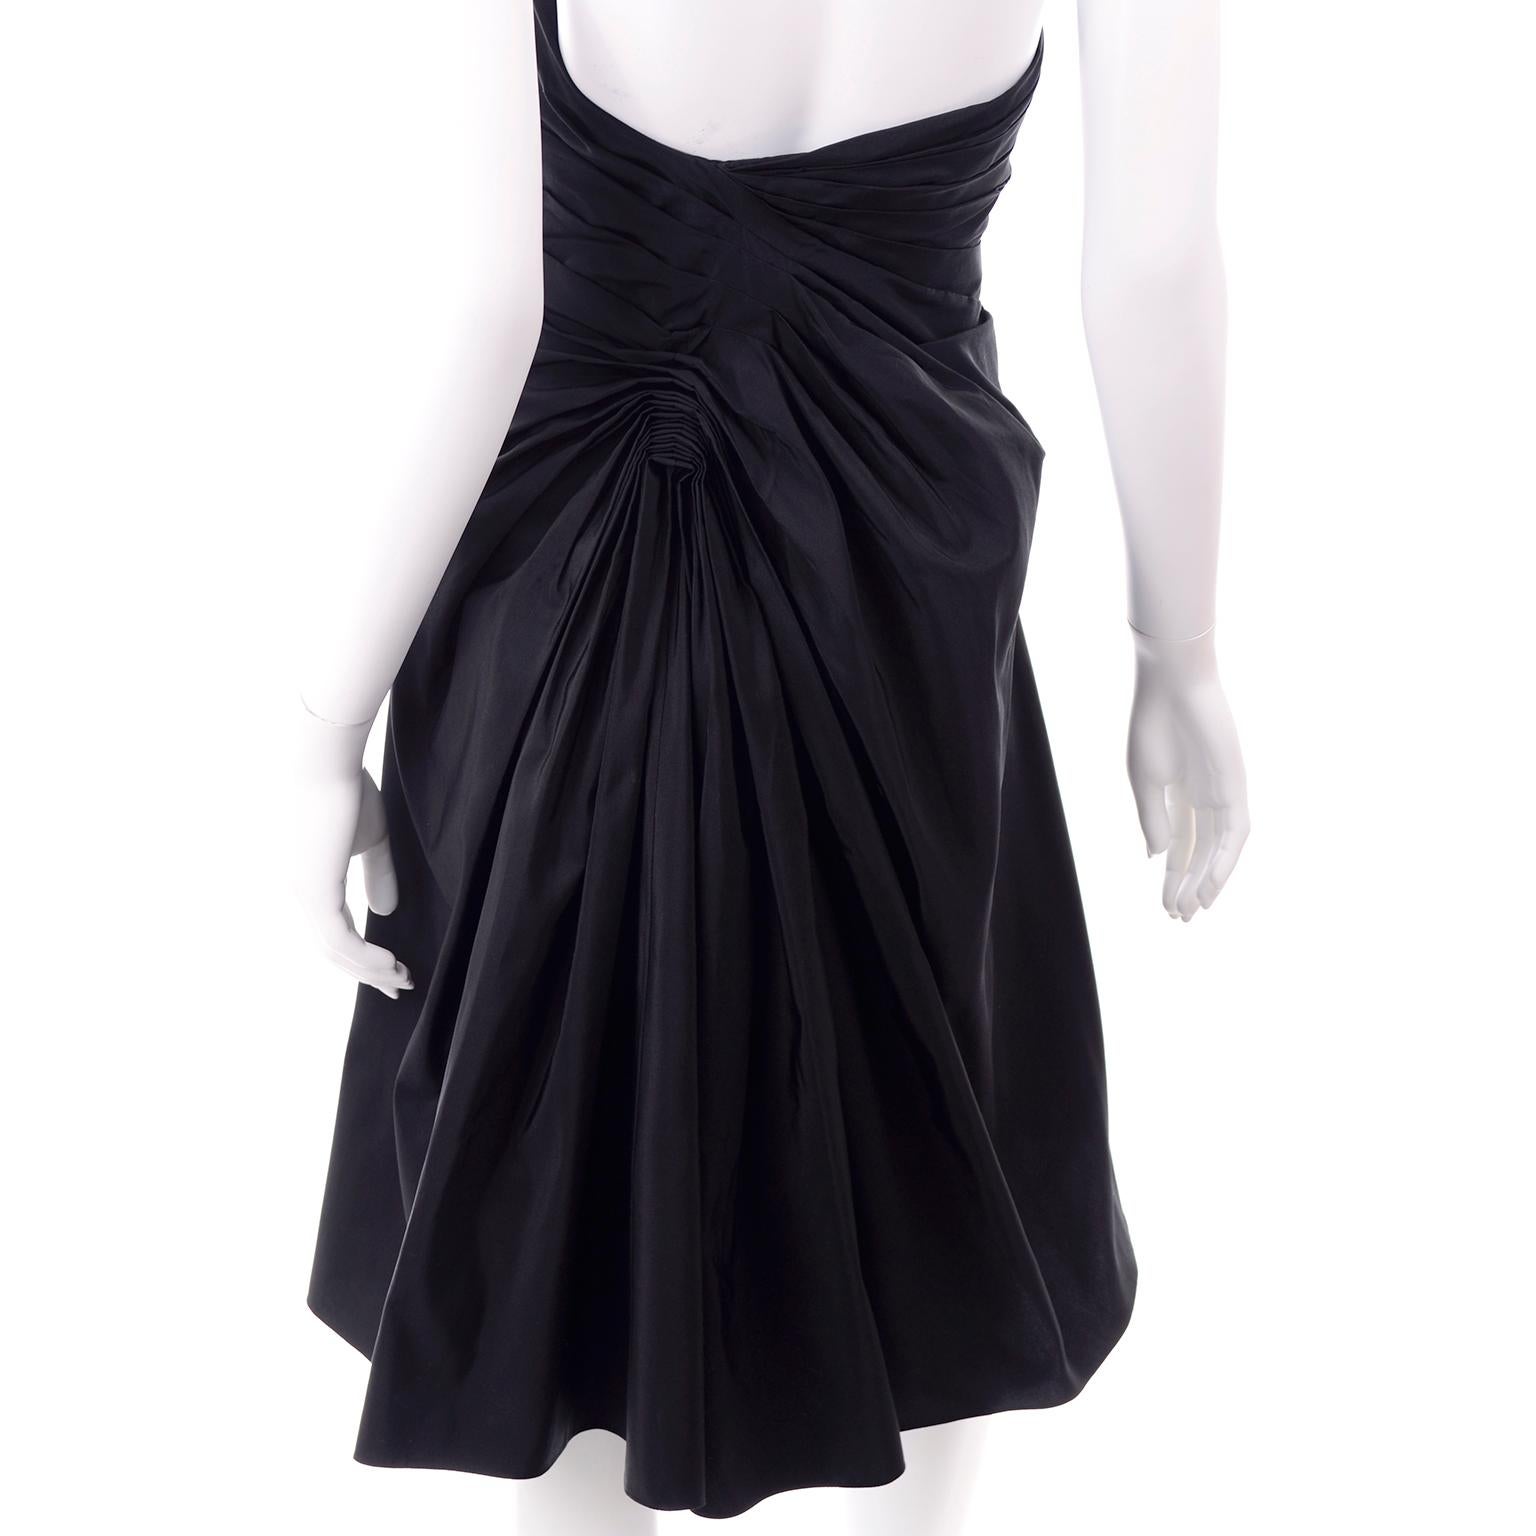 New w/ Tags John Galliano Christian Dior 2007 Black Evening Dress w Glass Beads 3